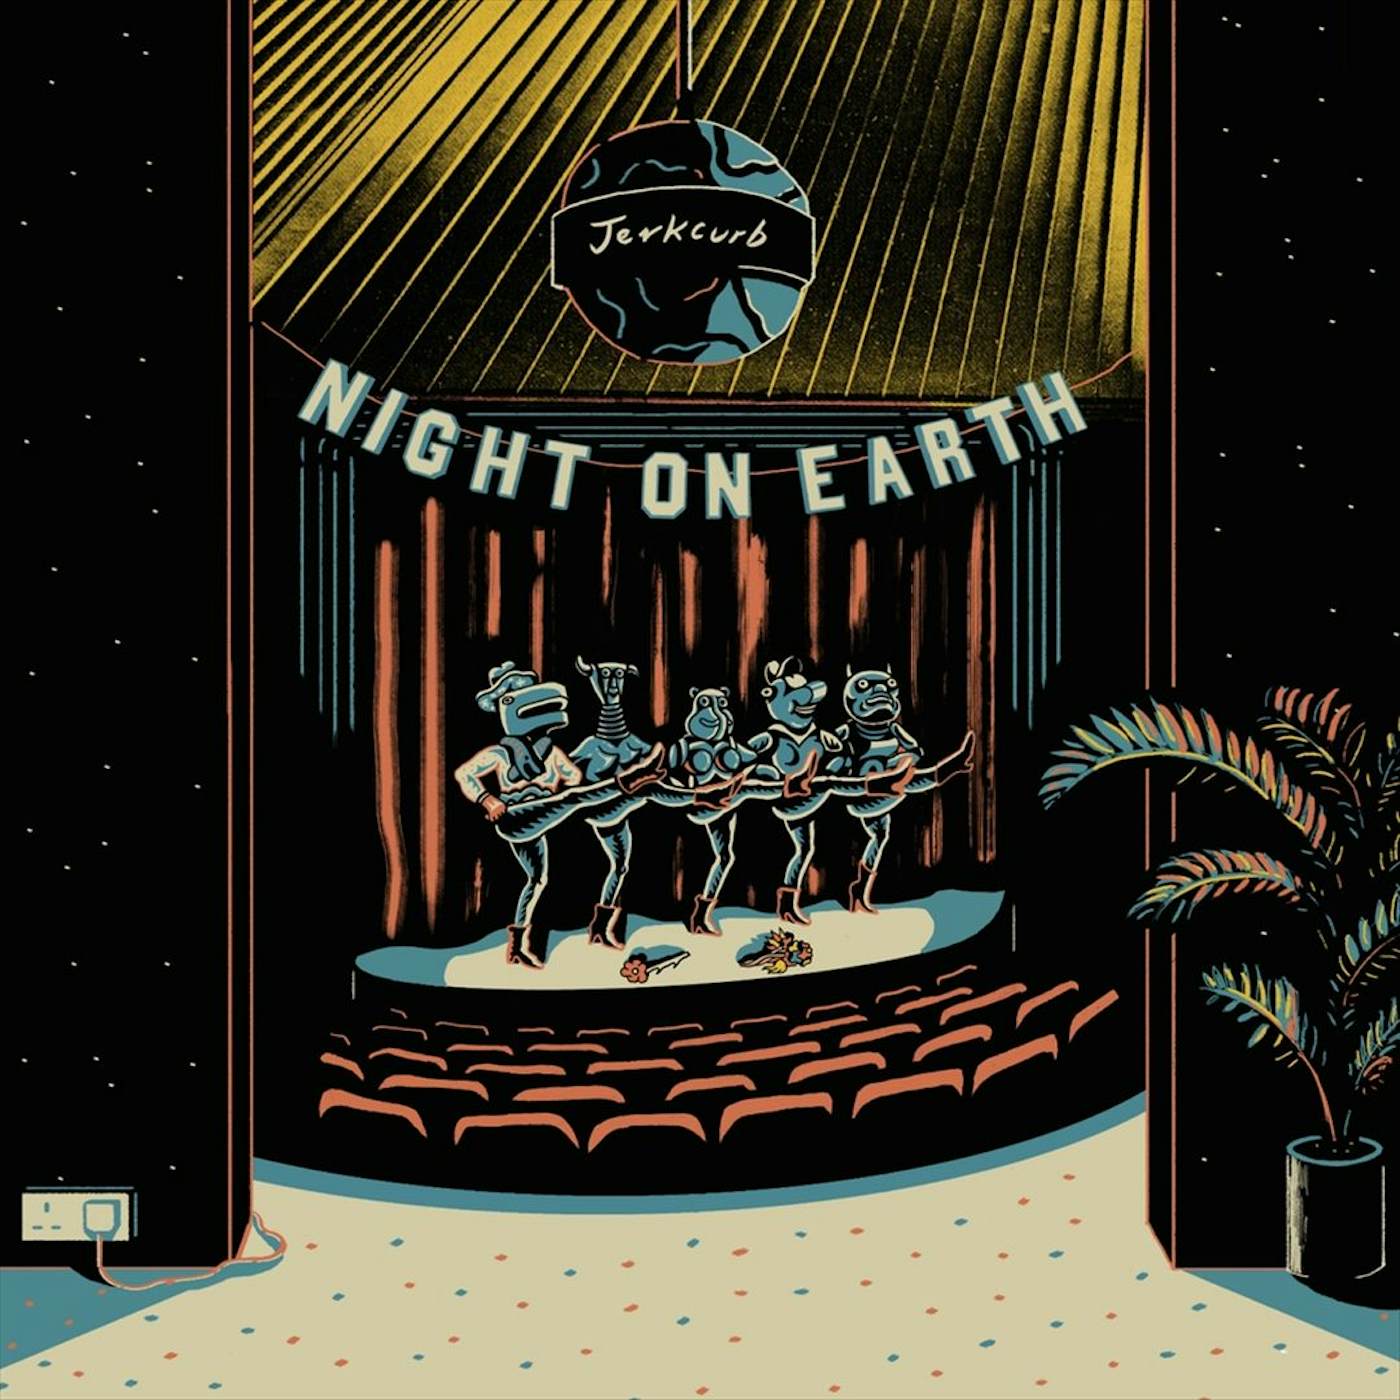 Jerkcurb NIGHT ON EARTH Vinyl Record - UK Release